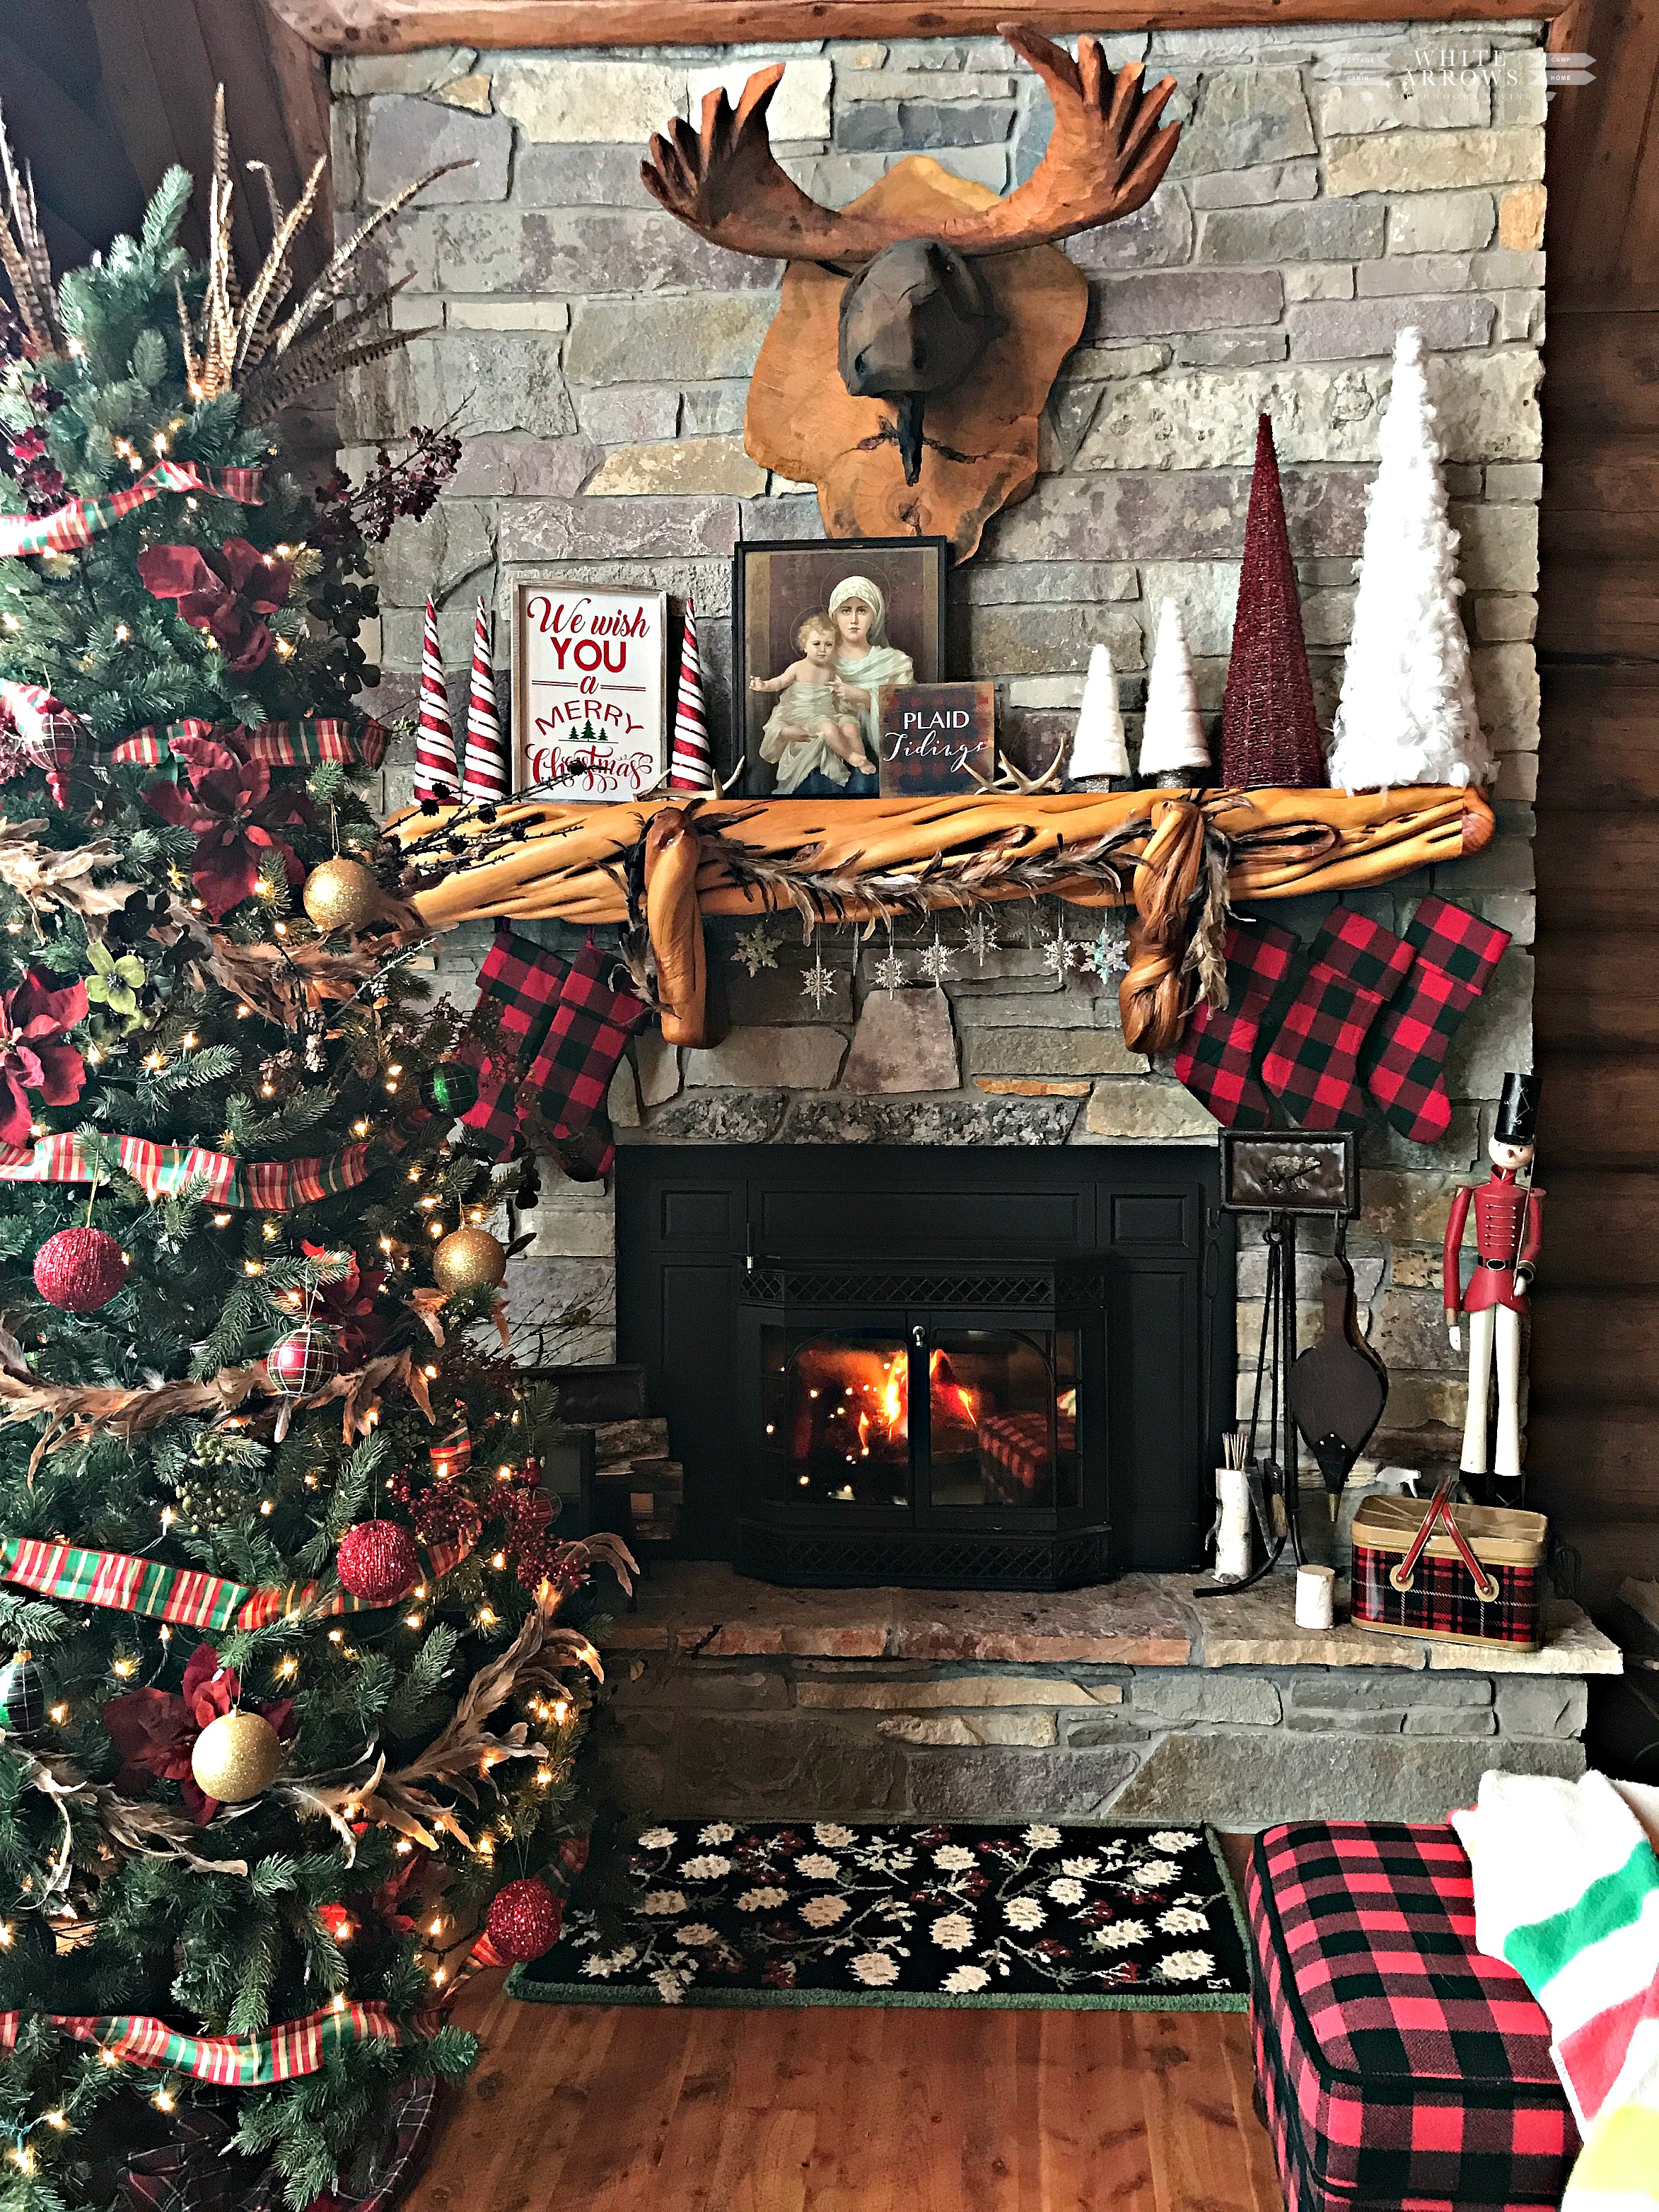 https://whitearrowshome.com/wp-content/uploads/2017/12/Christmas-Mantle-Christmas-Tree-Log-Cabin.jpg